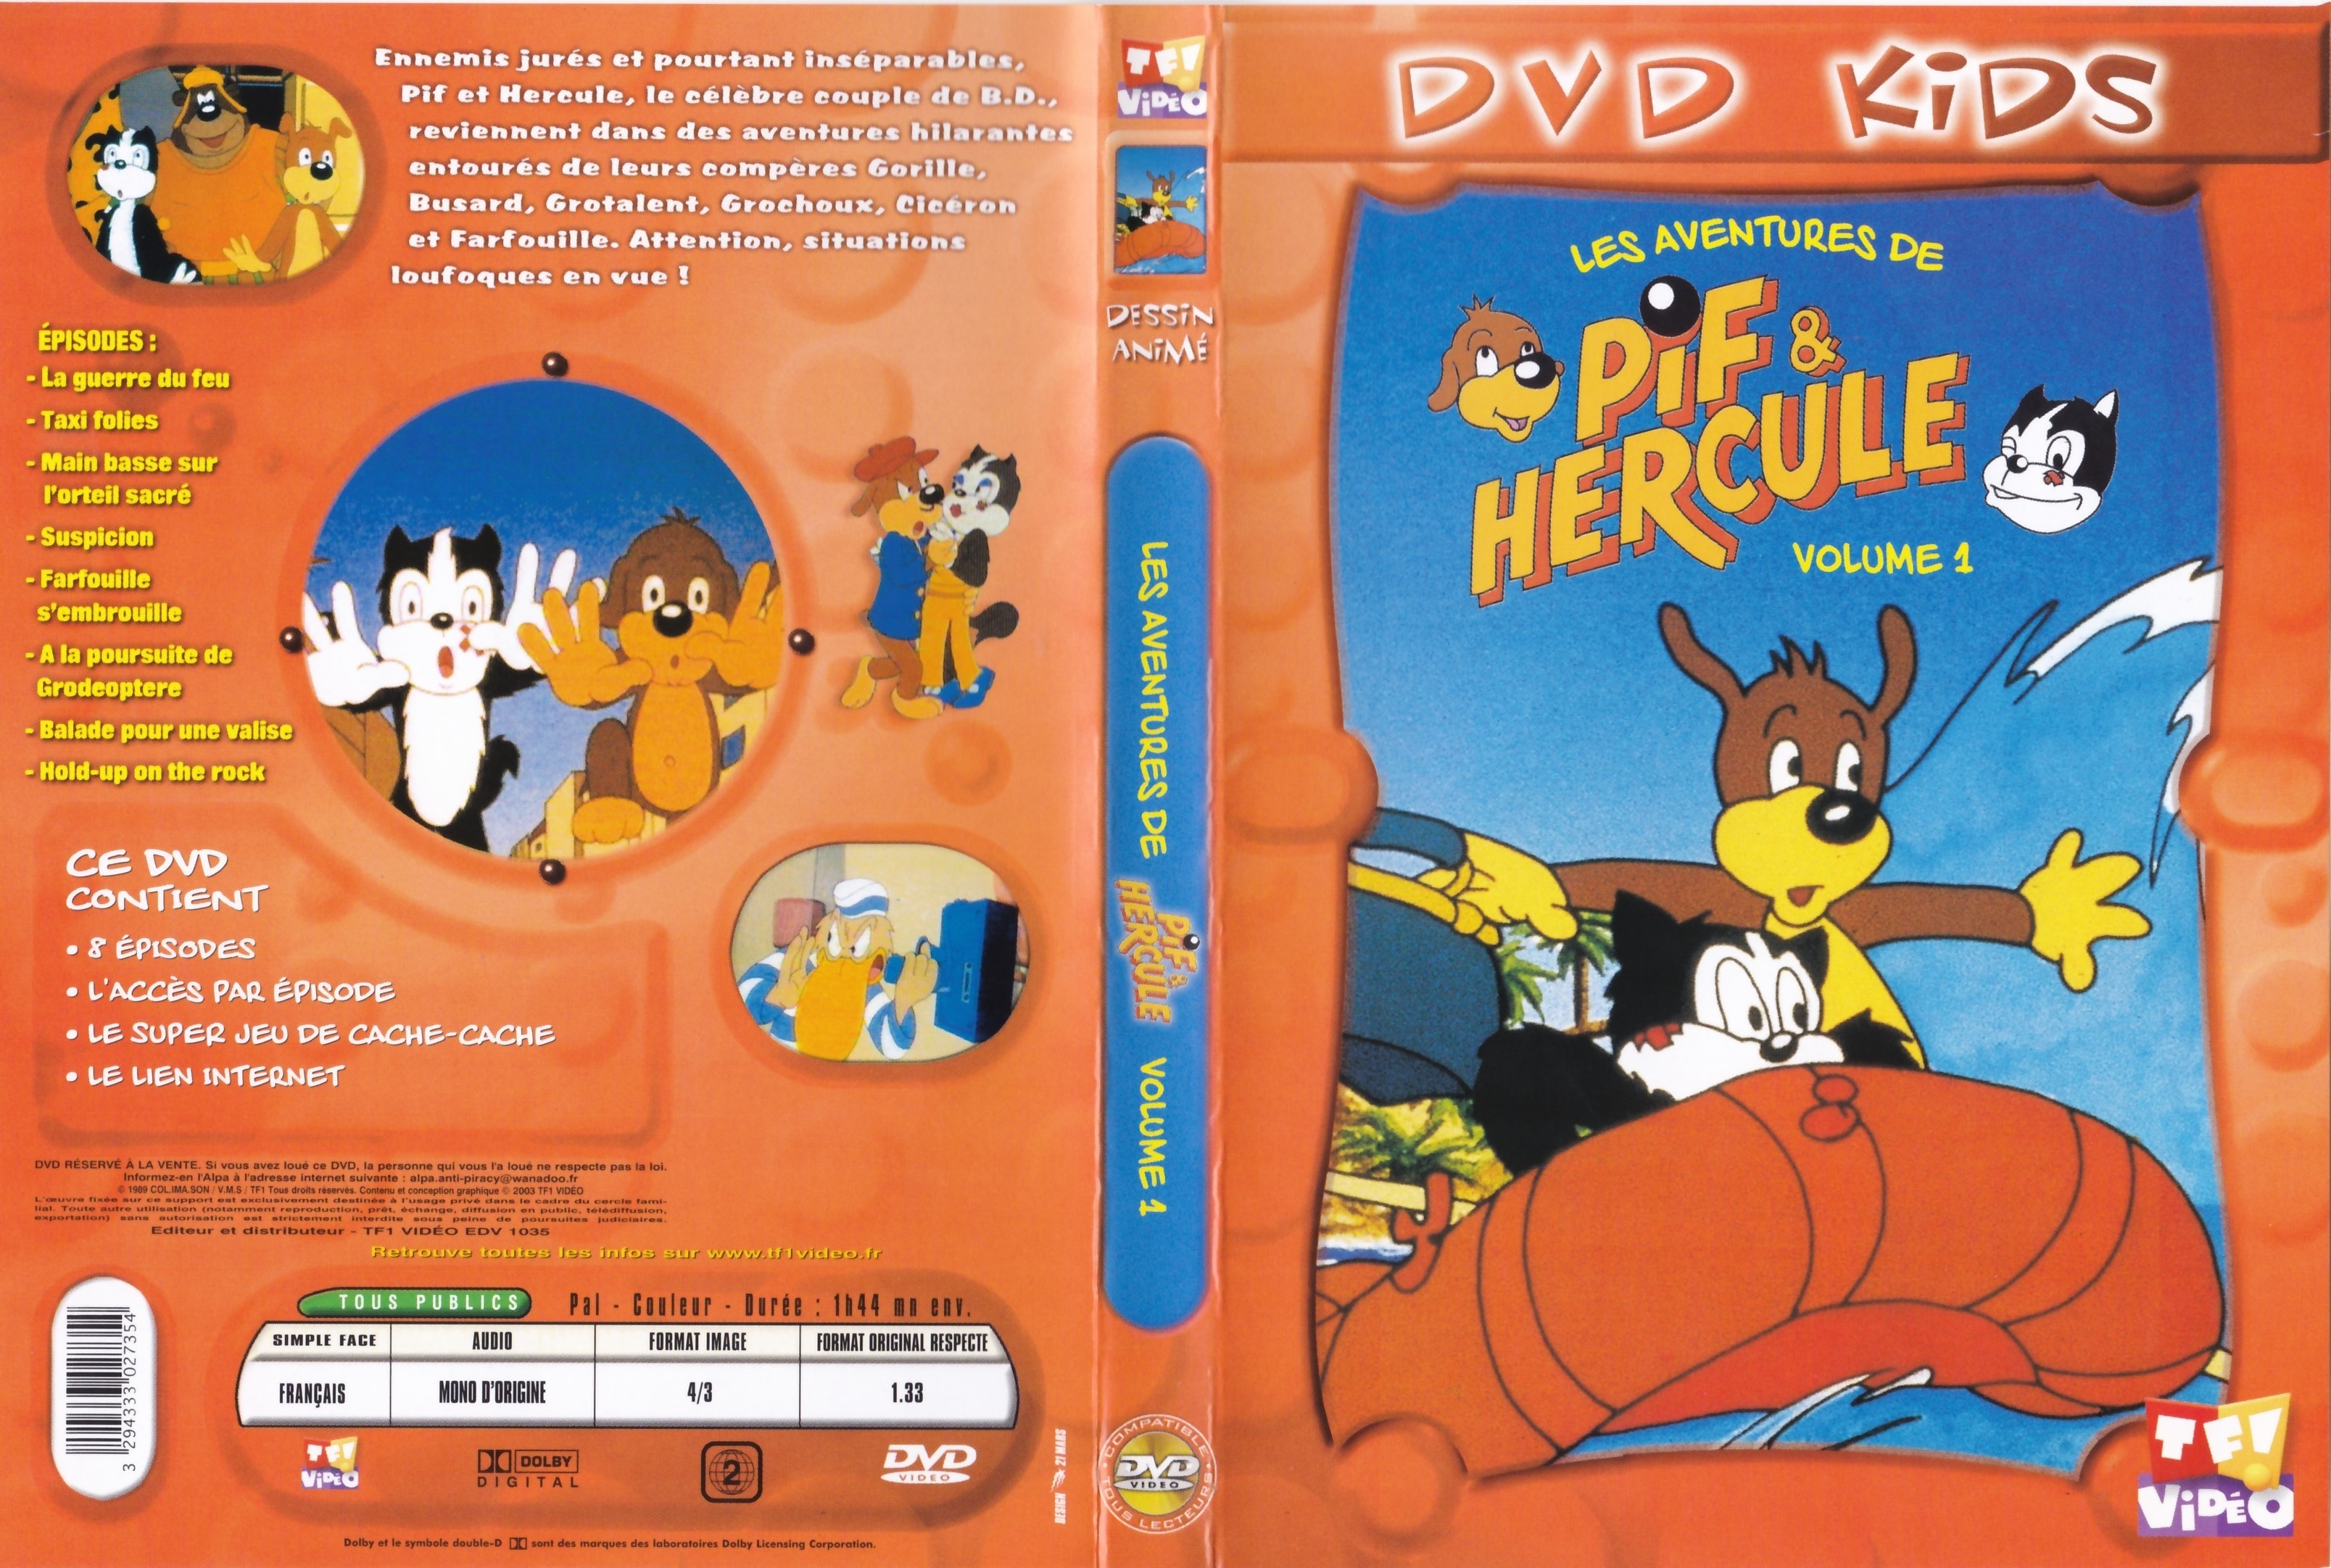 Jaquette DVD Les aventures de Pif & Hercule Vol 1